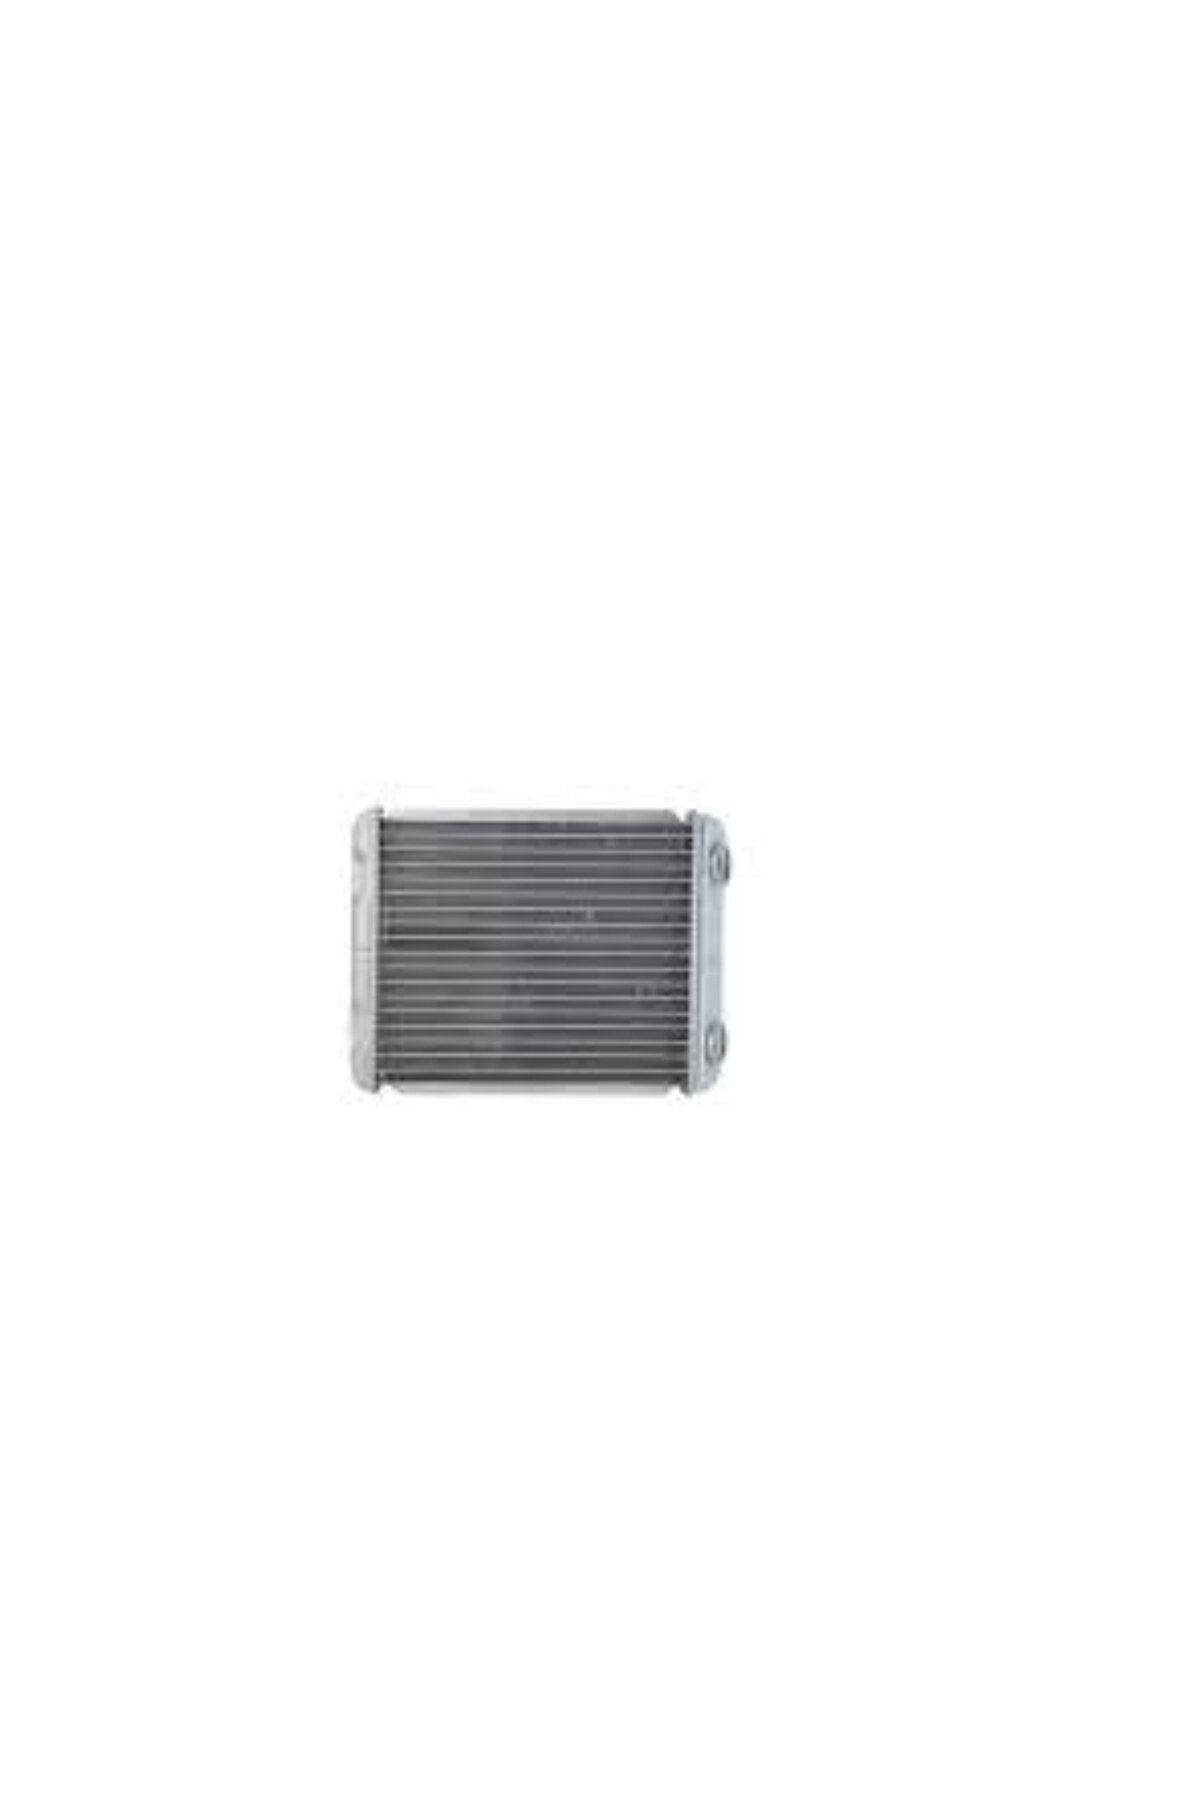 Wisco Kalorıfer Radyatoru Brazıng Mt-At 210x184x25 Mm– 7701206524-Wısco- Renault 01 Ve Sonrası Uyumlu